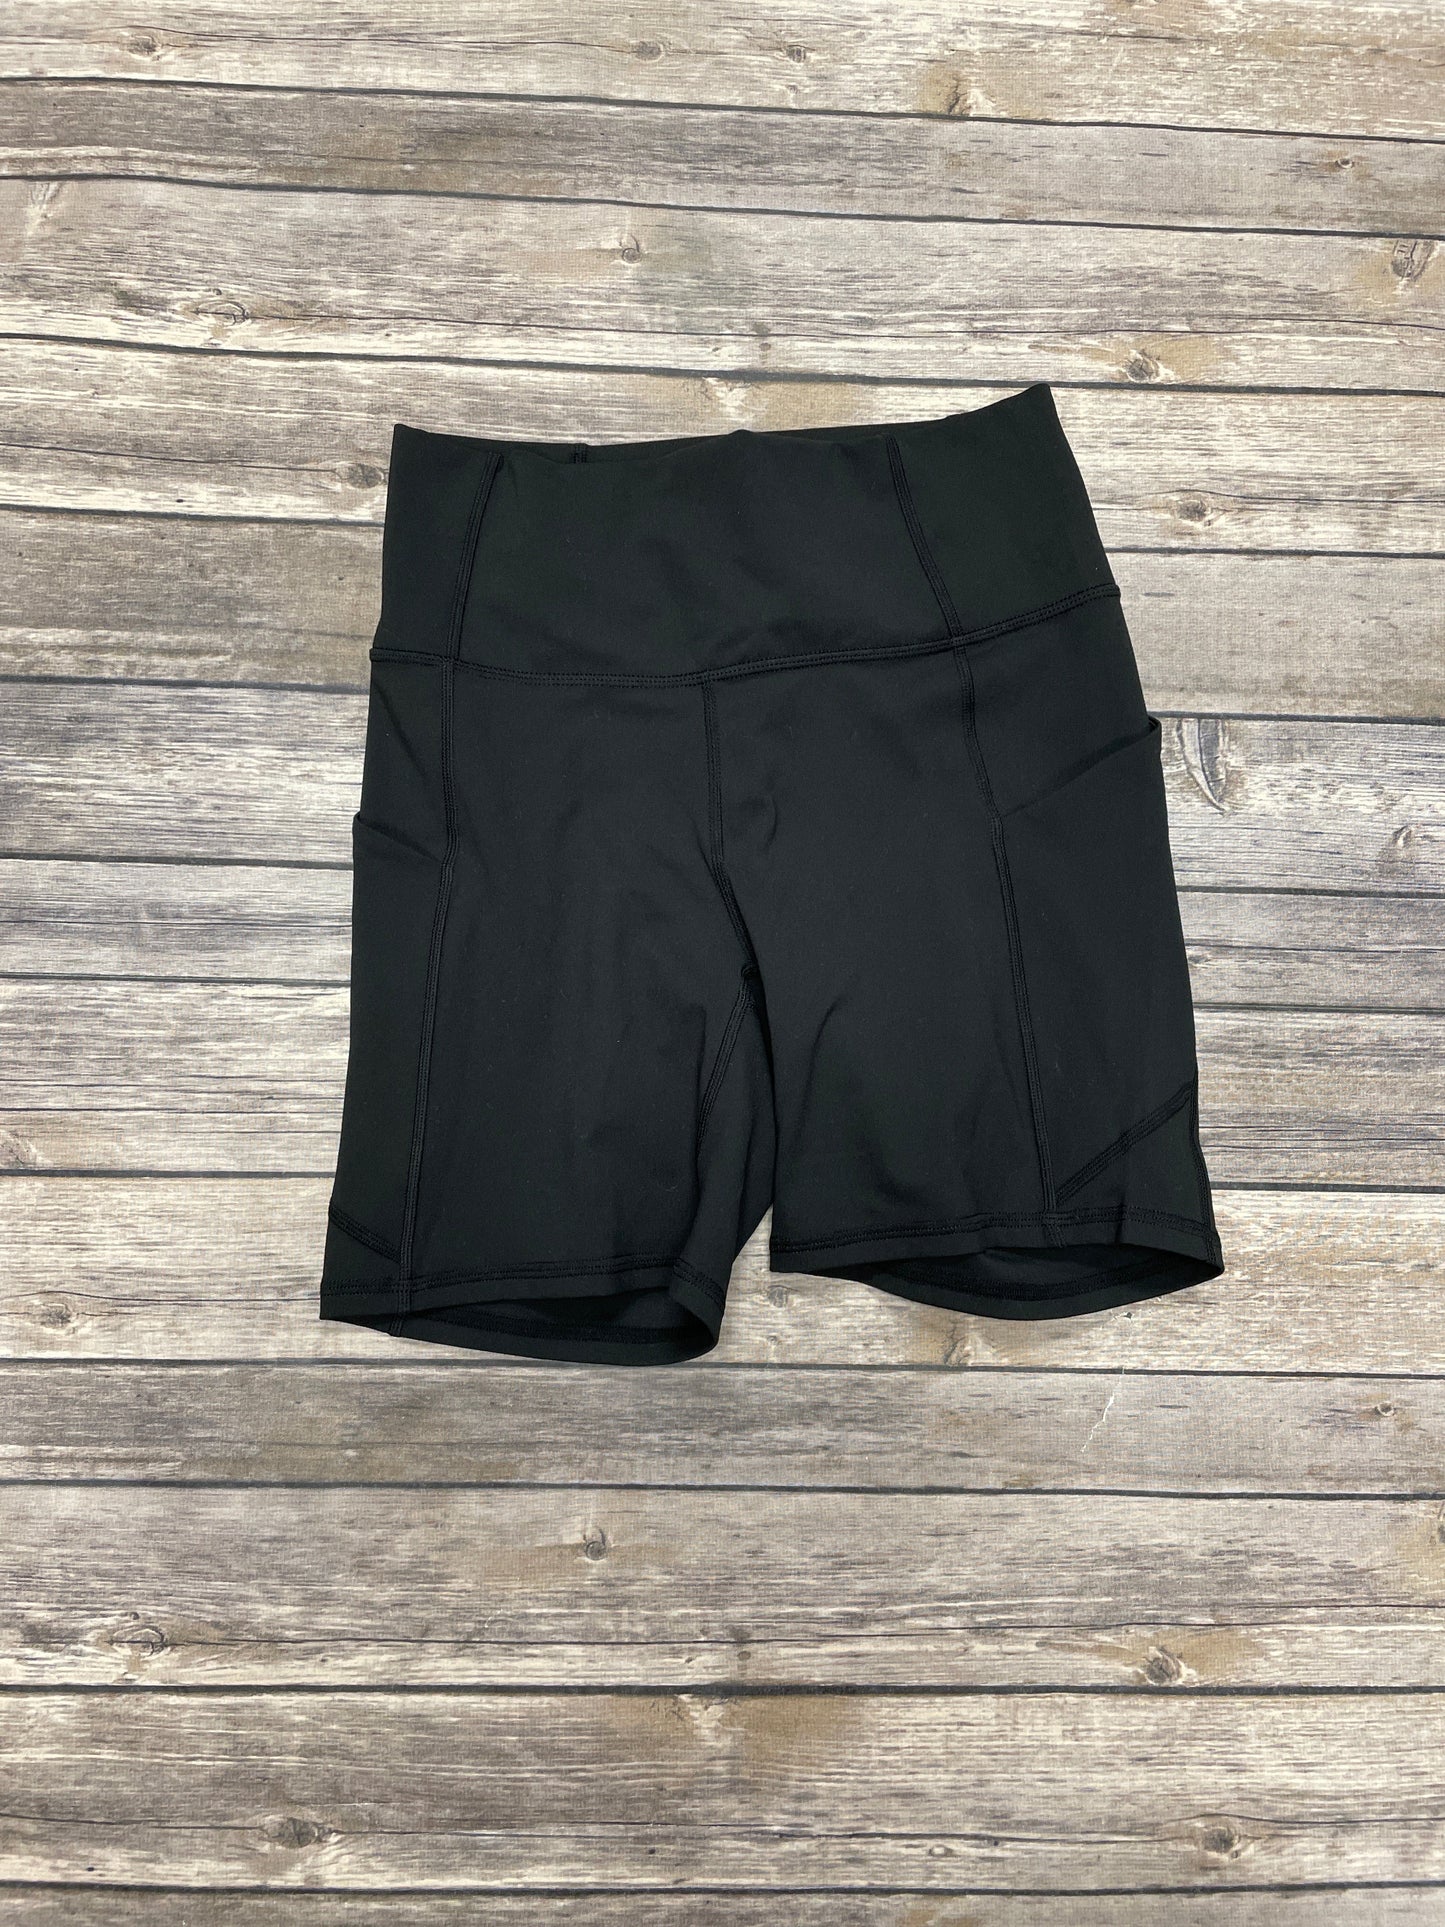 Black Athletic Shorts Fabletics, Size S